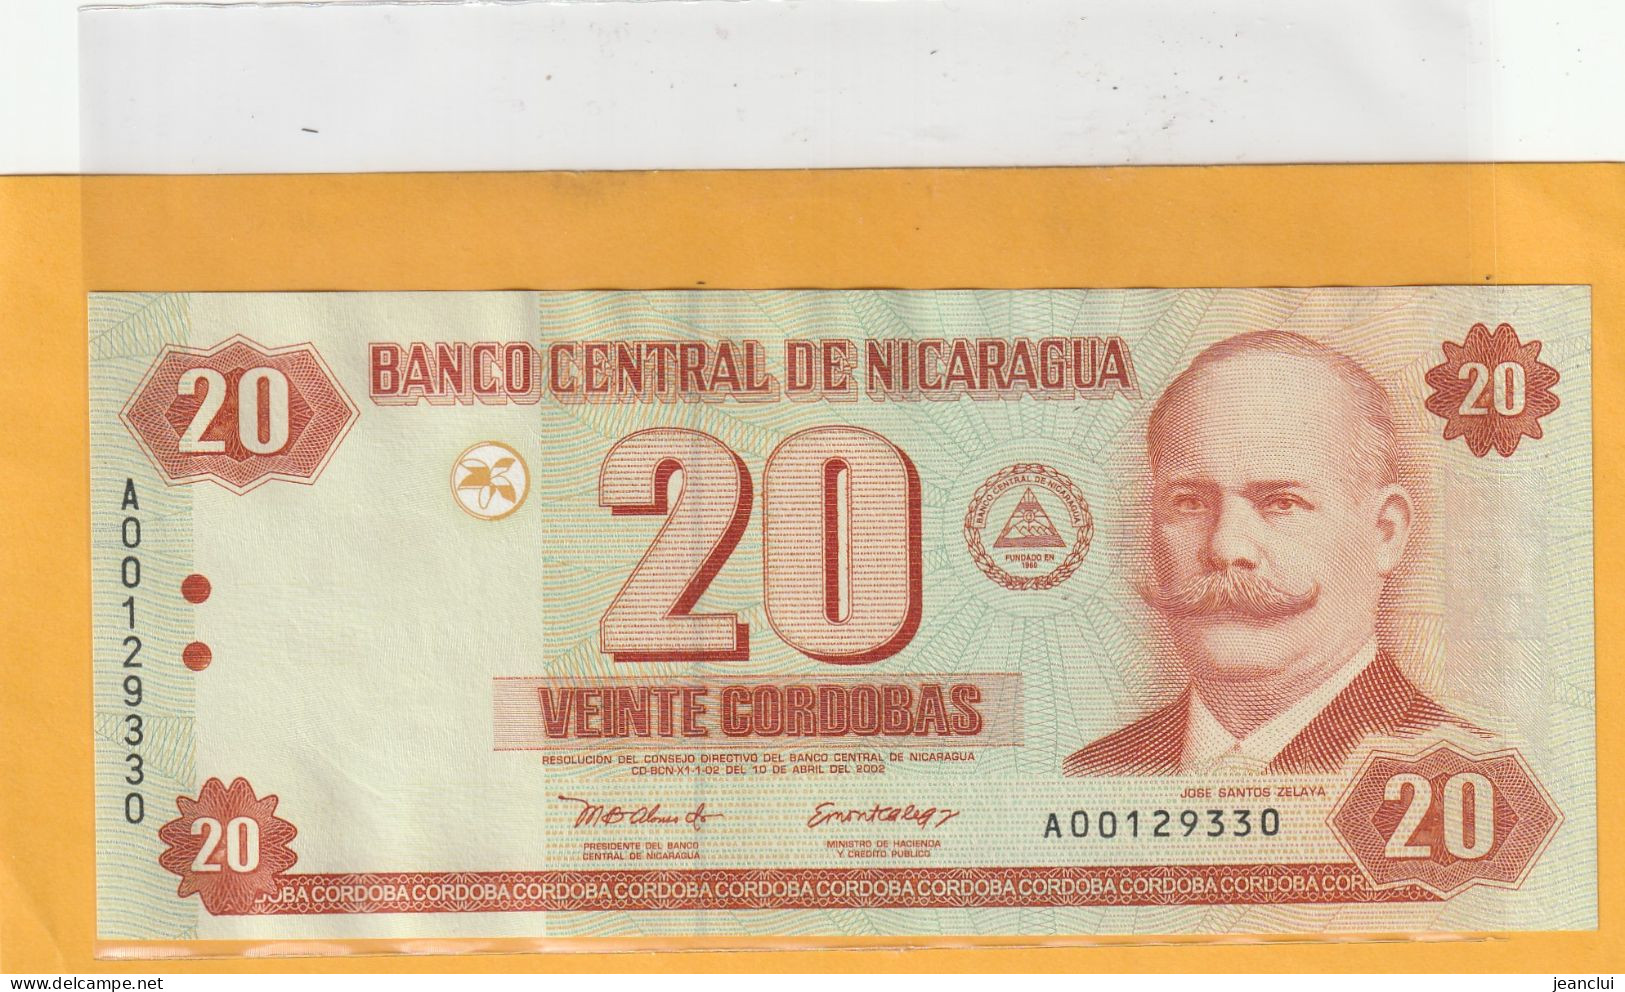 BANCO CENTRAL DE NICARAGUA  .  20 CORDOBAS  .  10 DE ABRIL DEL 2002  .  N°  A00129330  .  2 SCANNES - Nicaragua